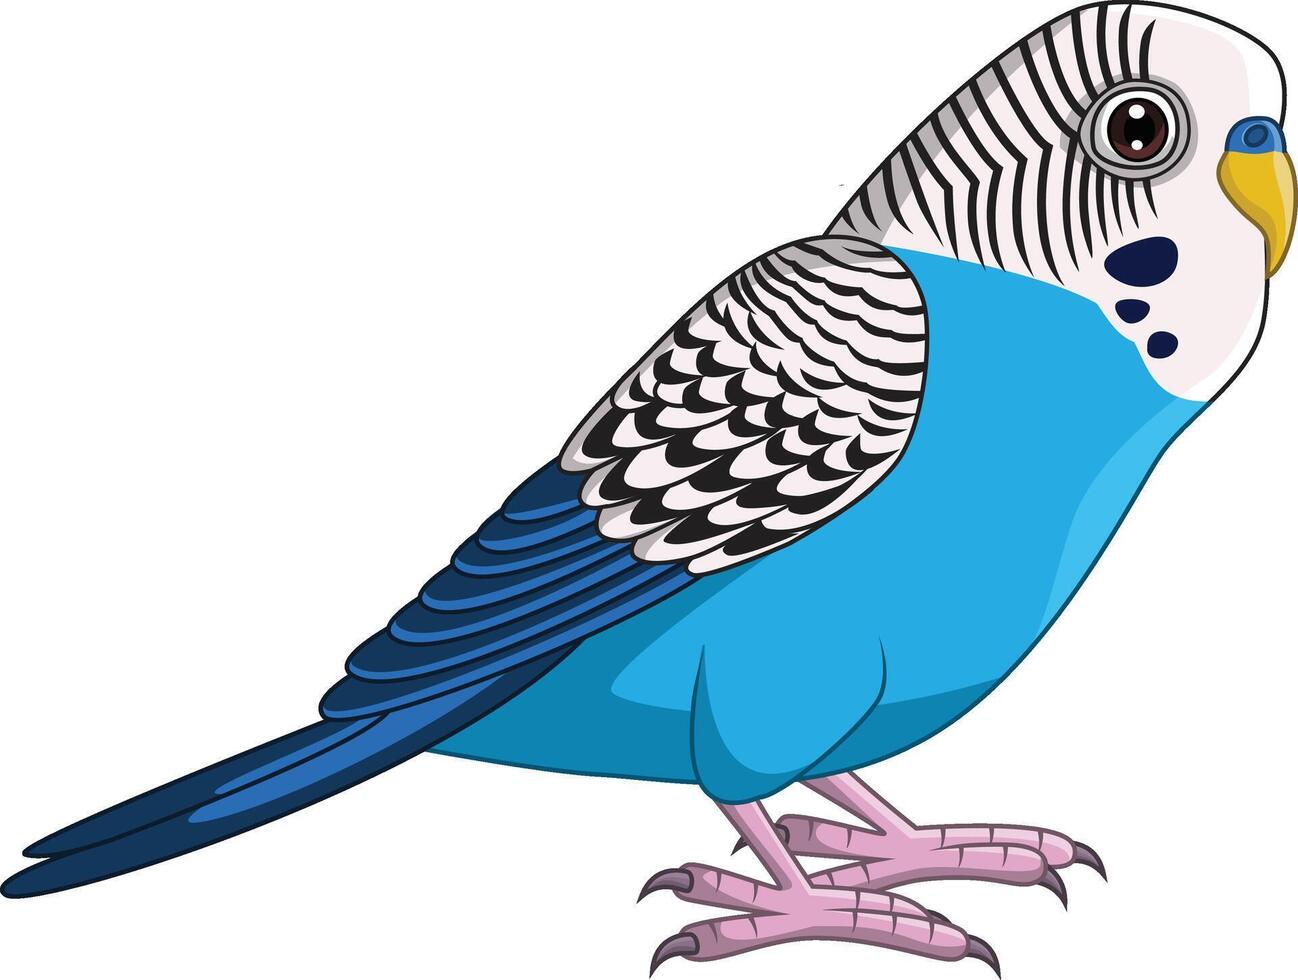 Cartoon Blue Budgie Parakeet on White Background vector